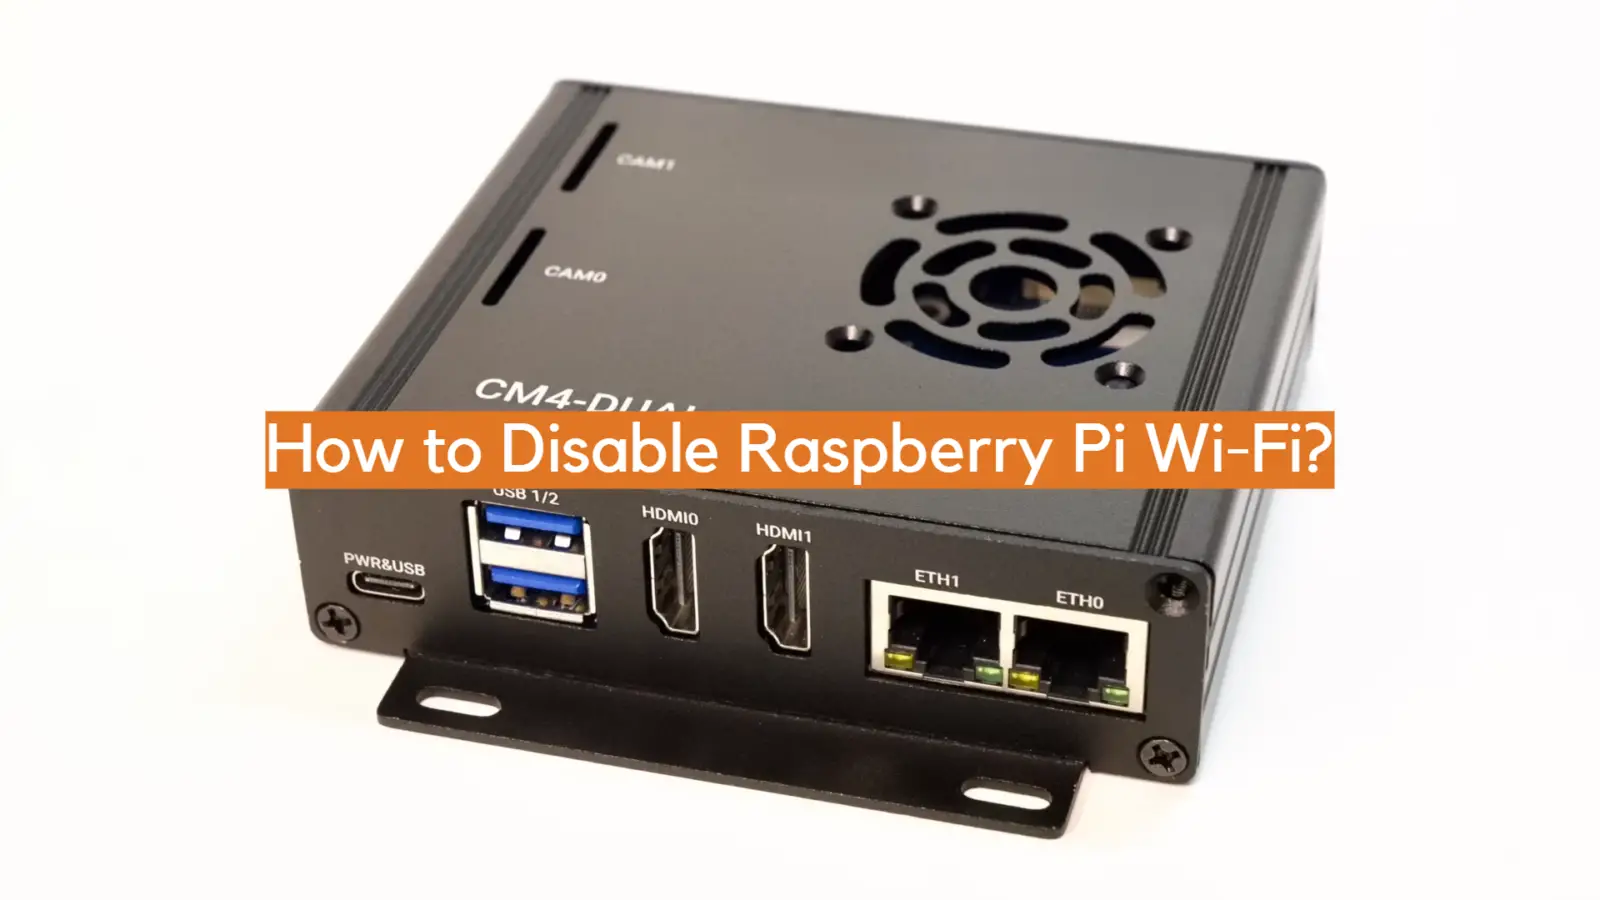 How to Disable Raspberry Pi Wi-Fi?